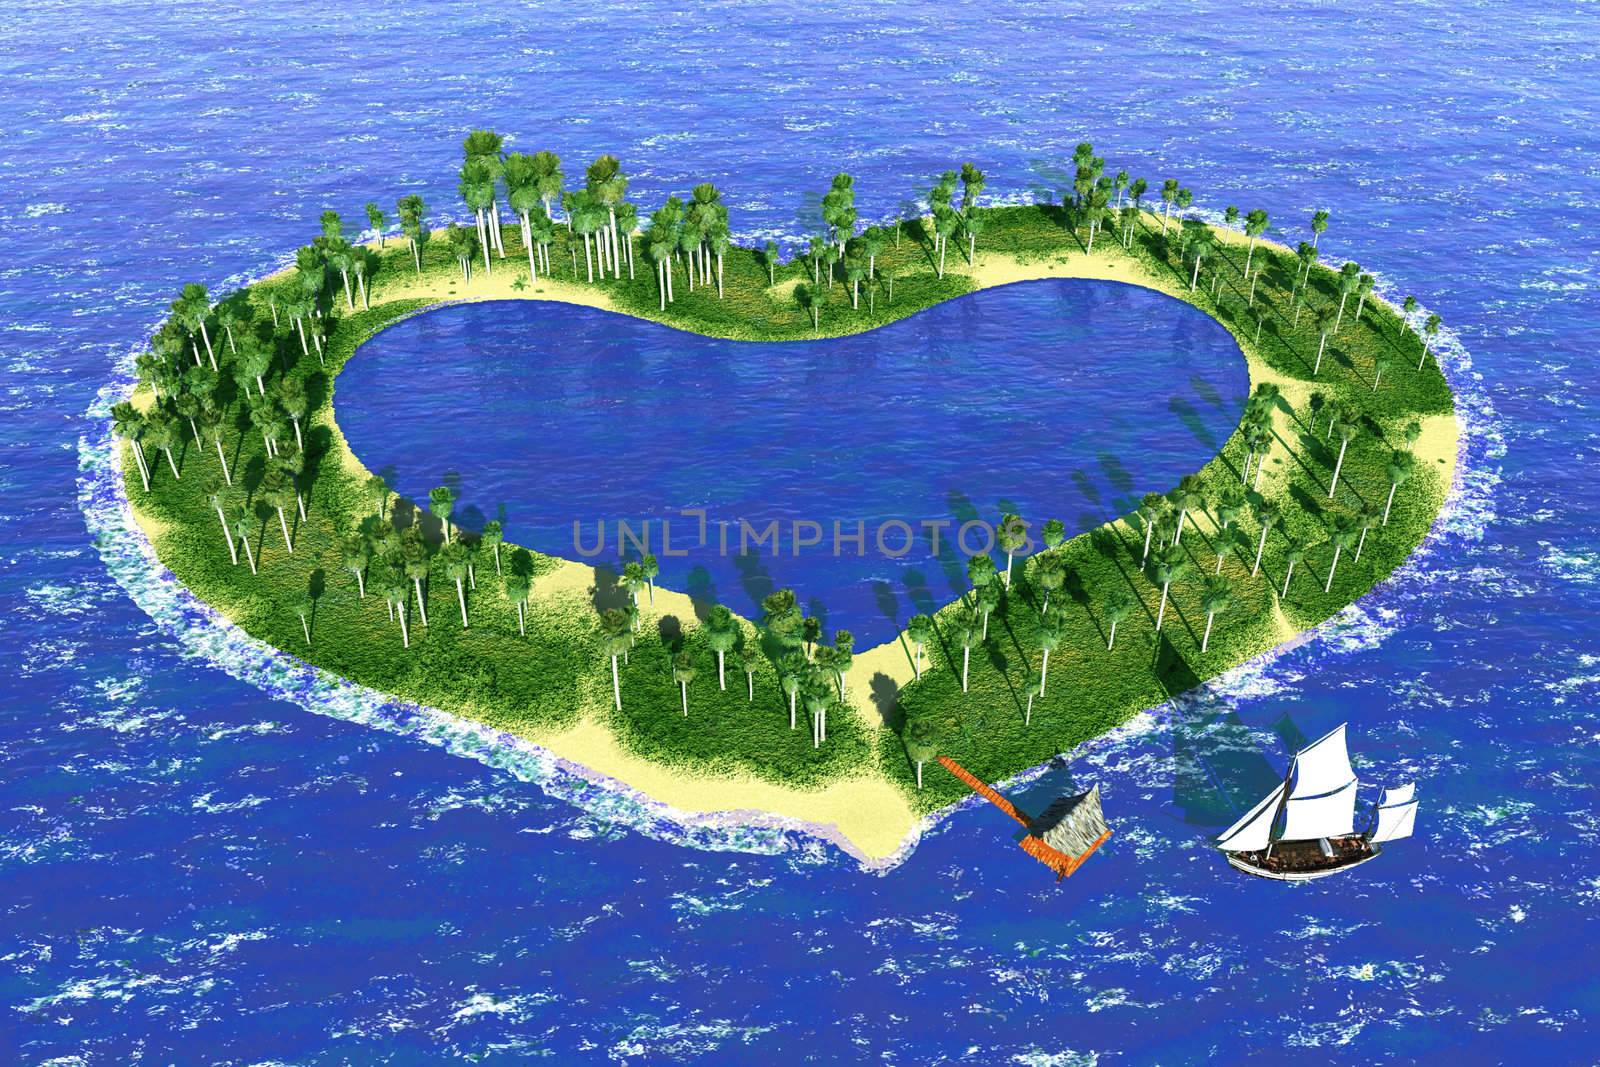 scene of the island heart